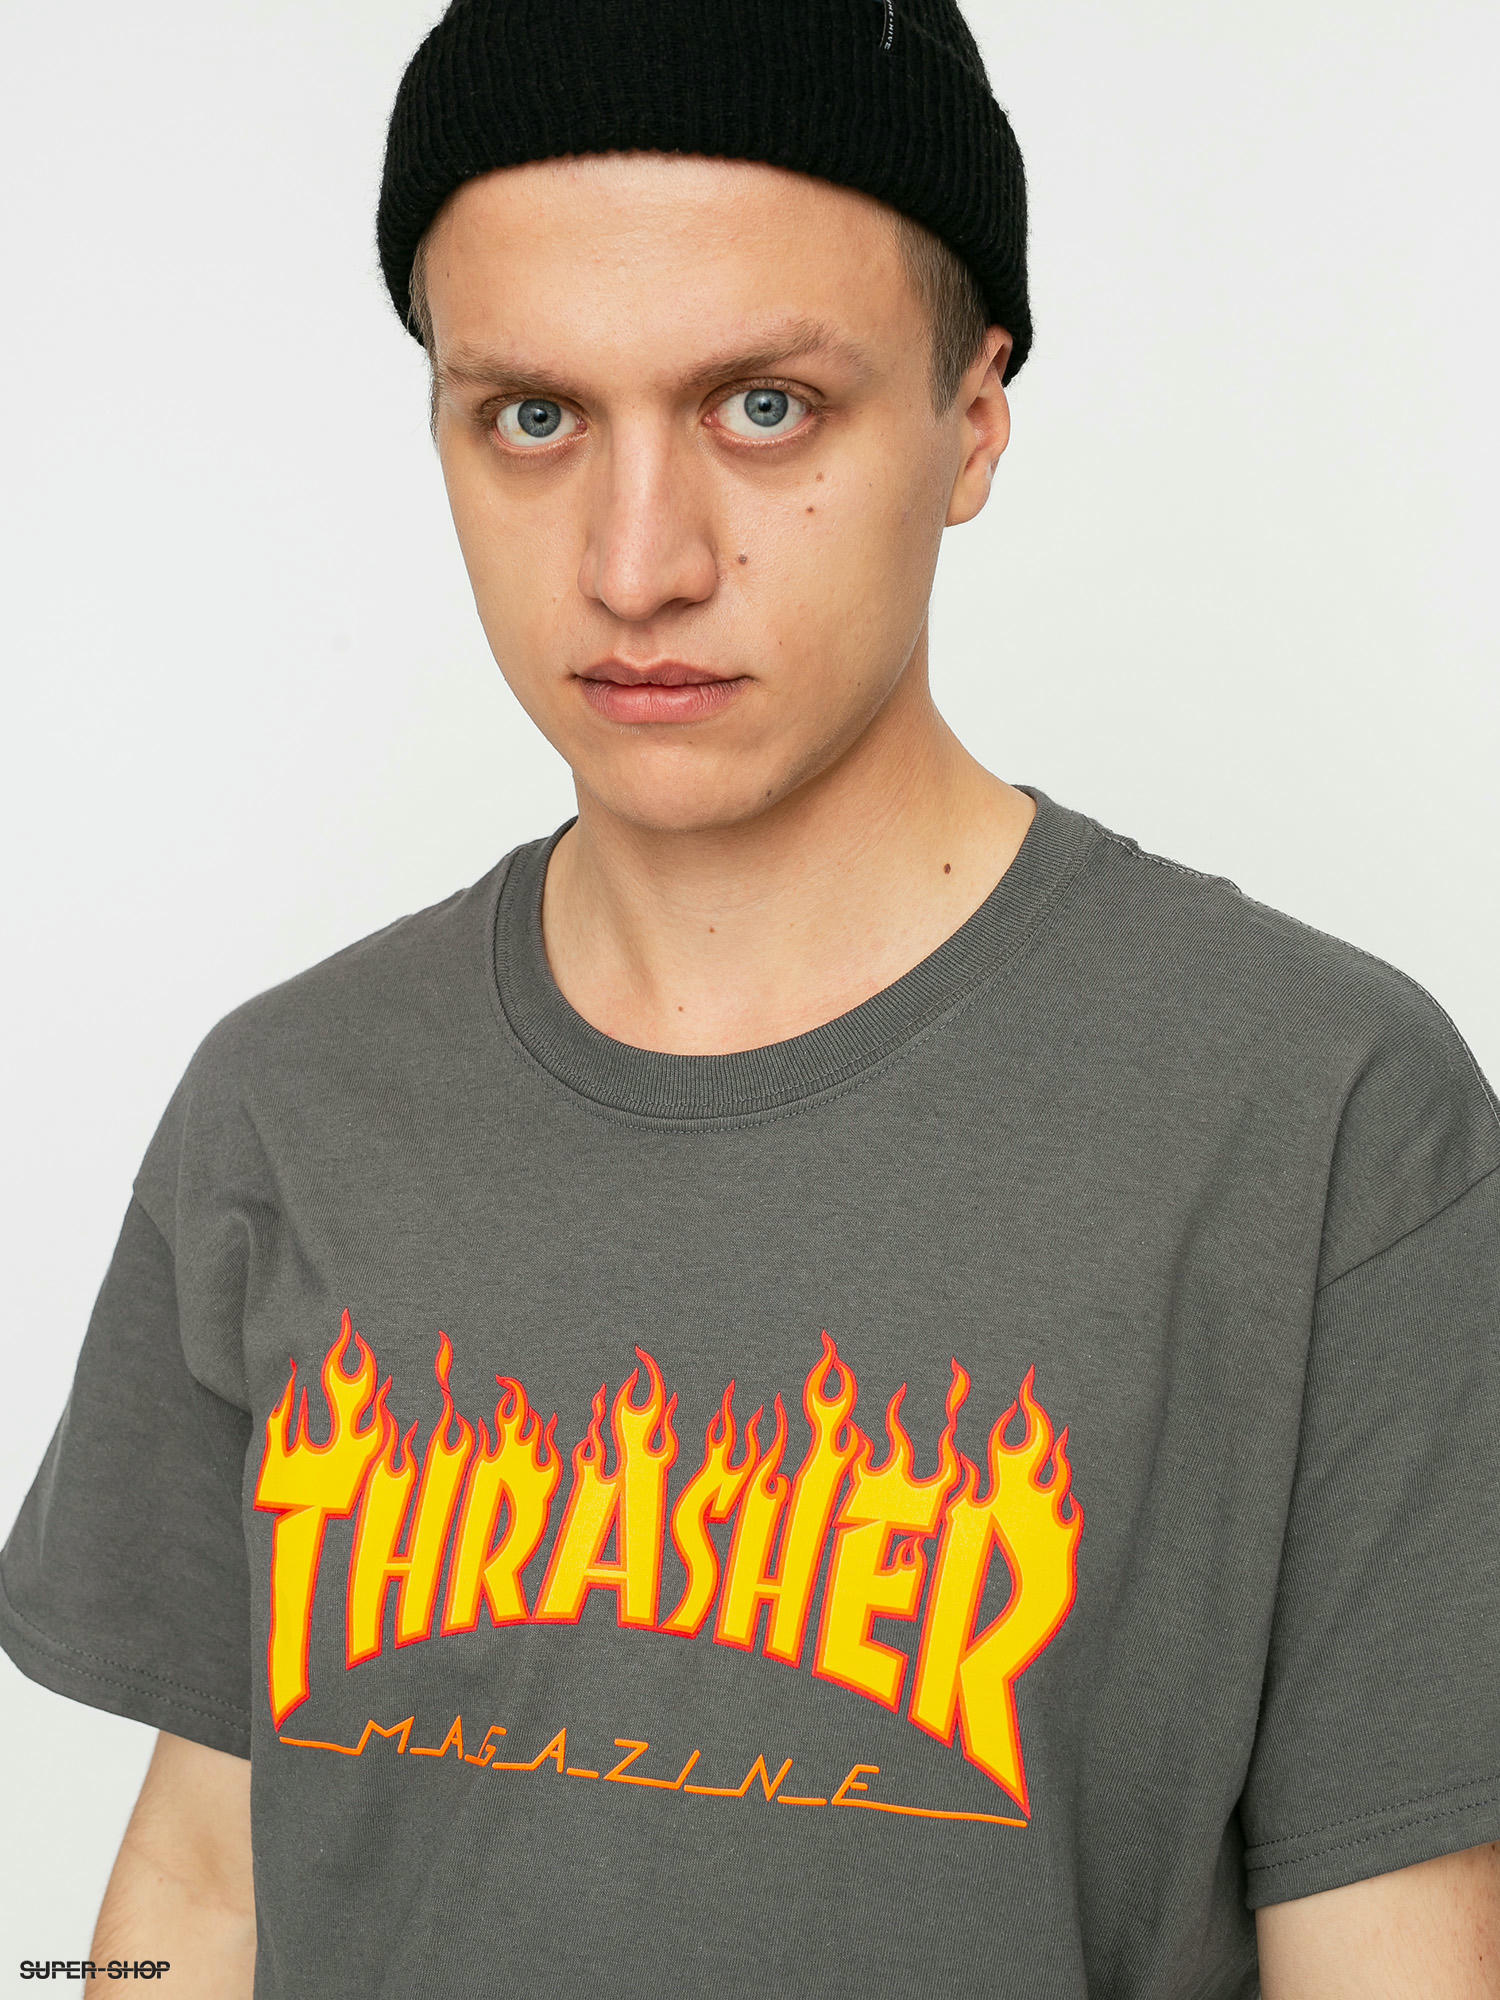 Buy > thrasher flame logo tee > in stock